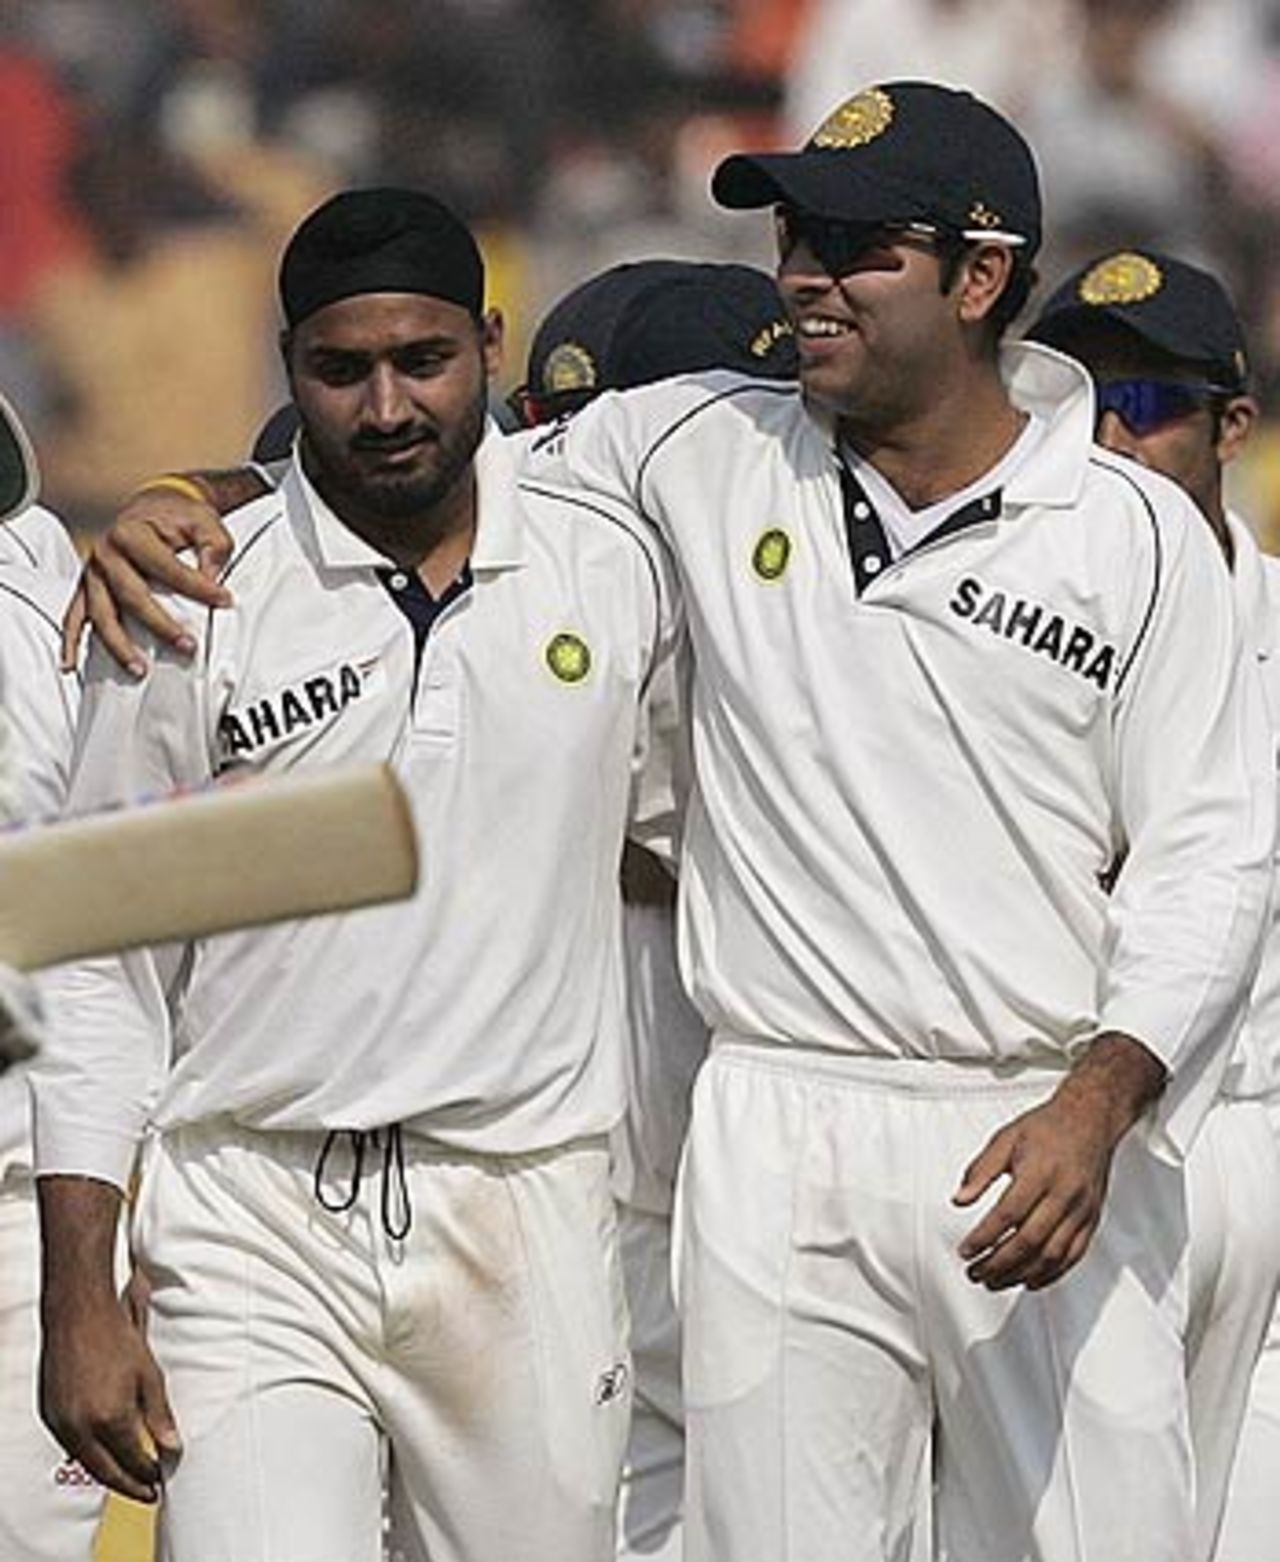 Harbhajan Singh and Yuvraj Singh celebrate Marvan Atapattu's wicket, India v Sri Lanka, 3rd Test, Ahmedabad, 4th day, December 21, 2005